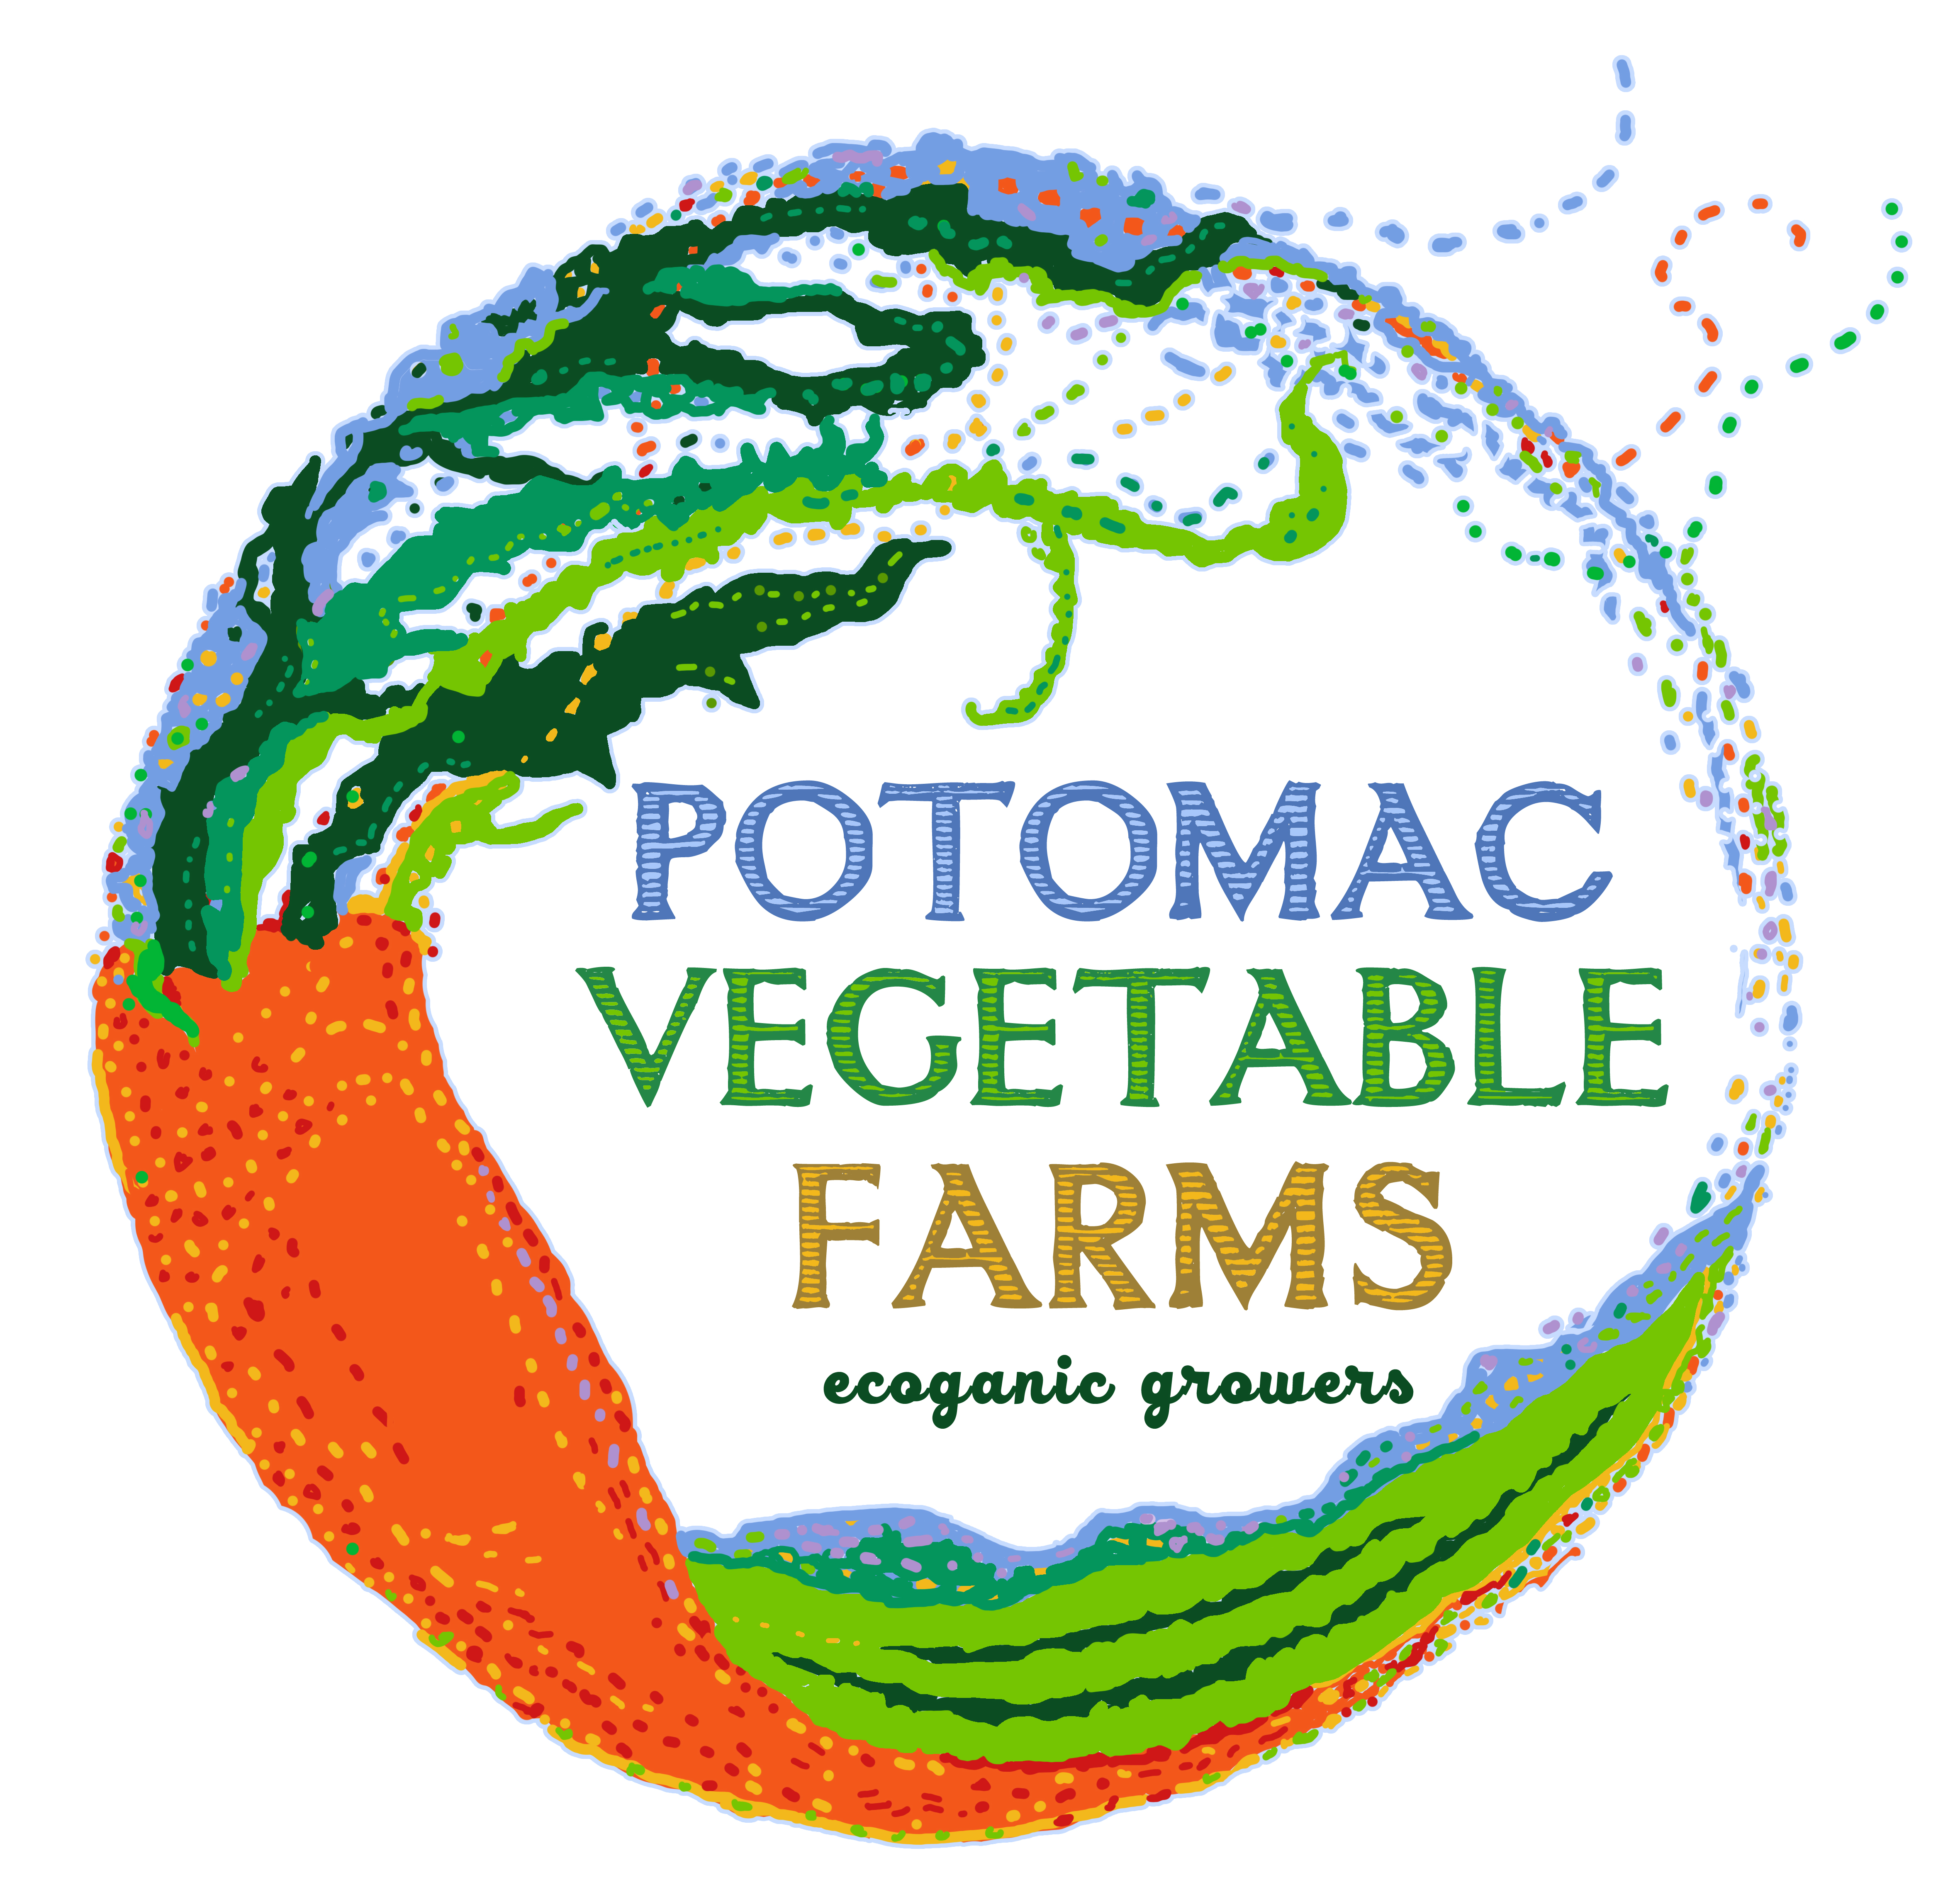 Potomac Vegetable Farms logo